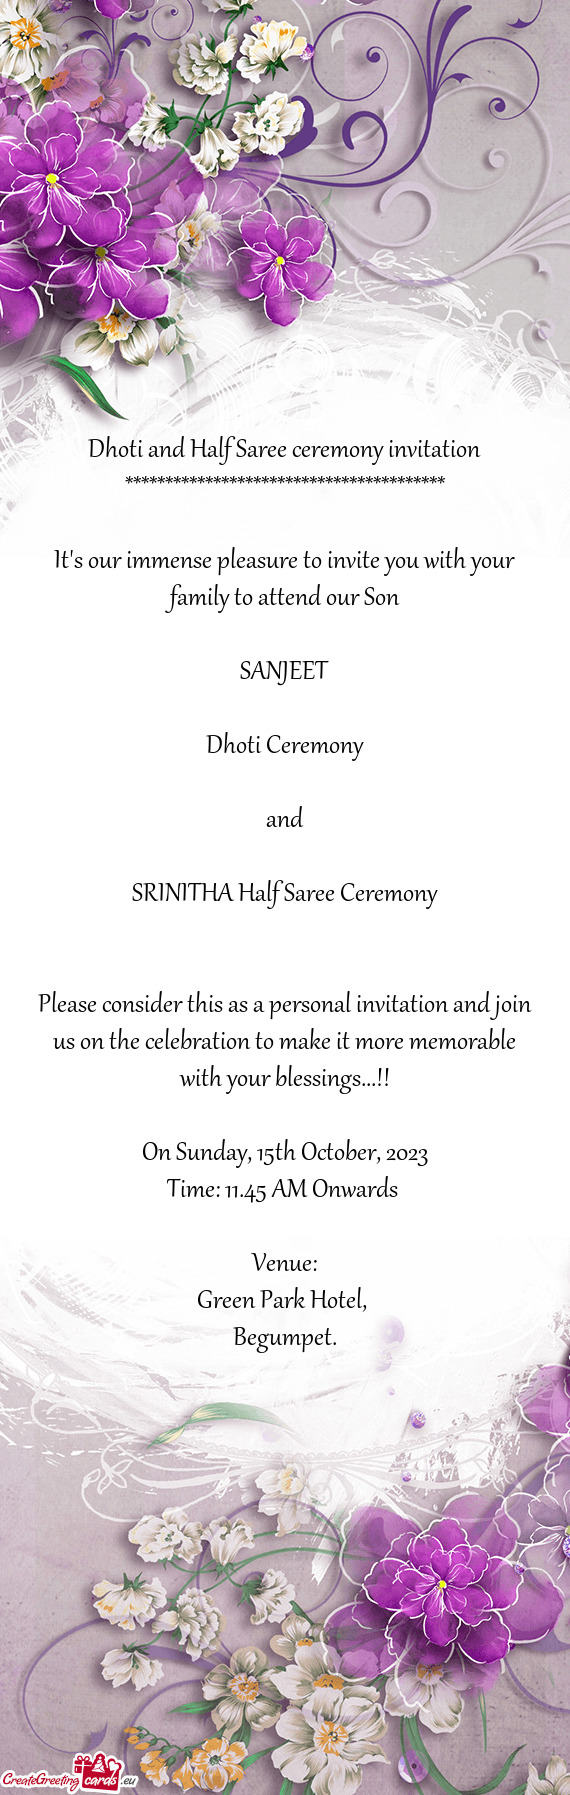 SRINITHA Half Saree Ceremony